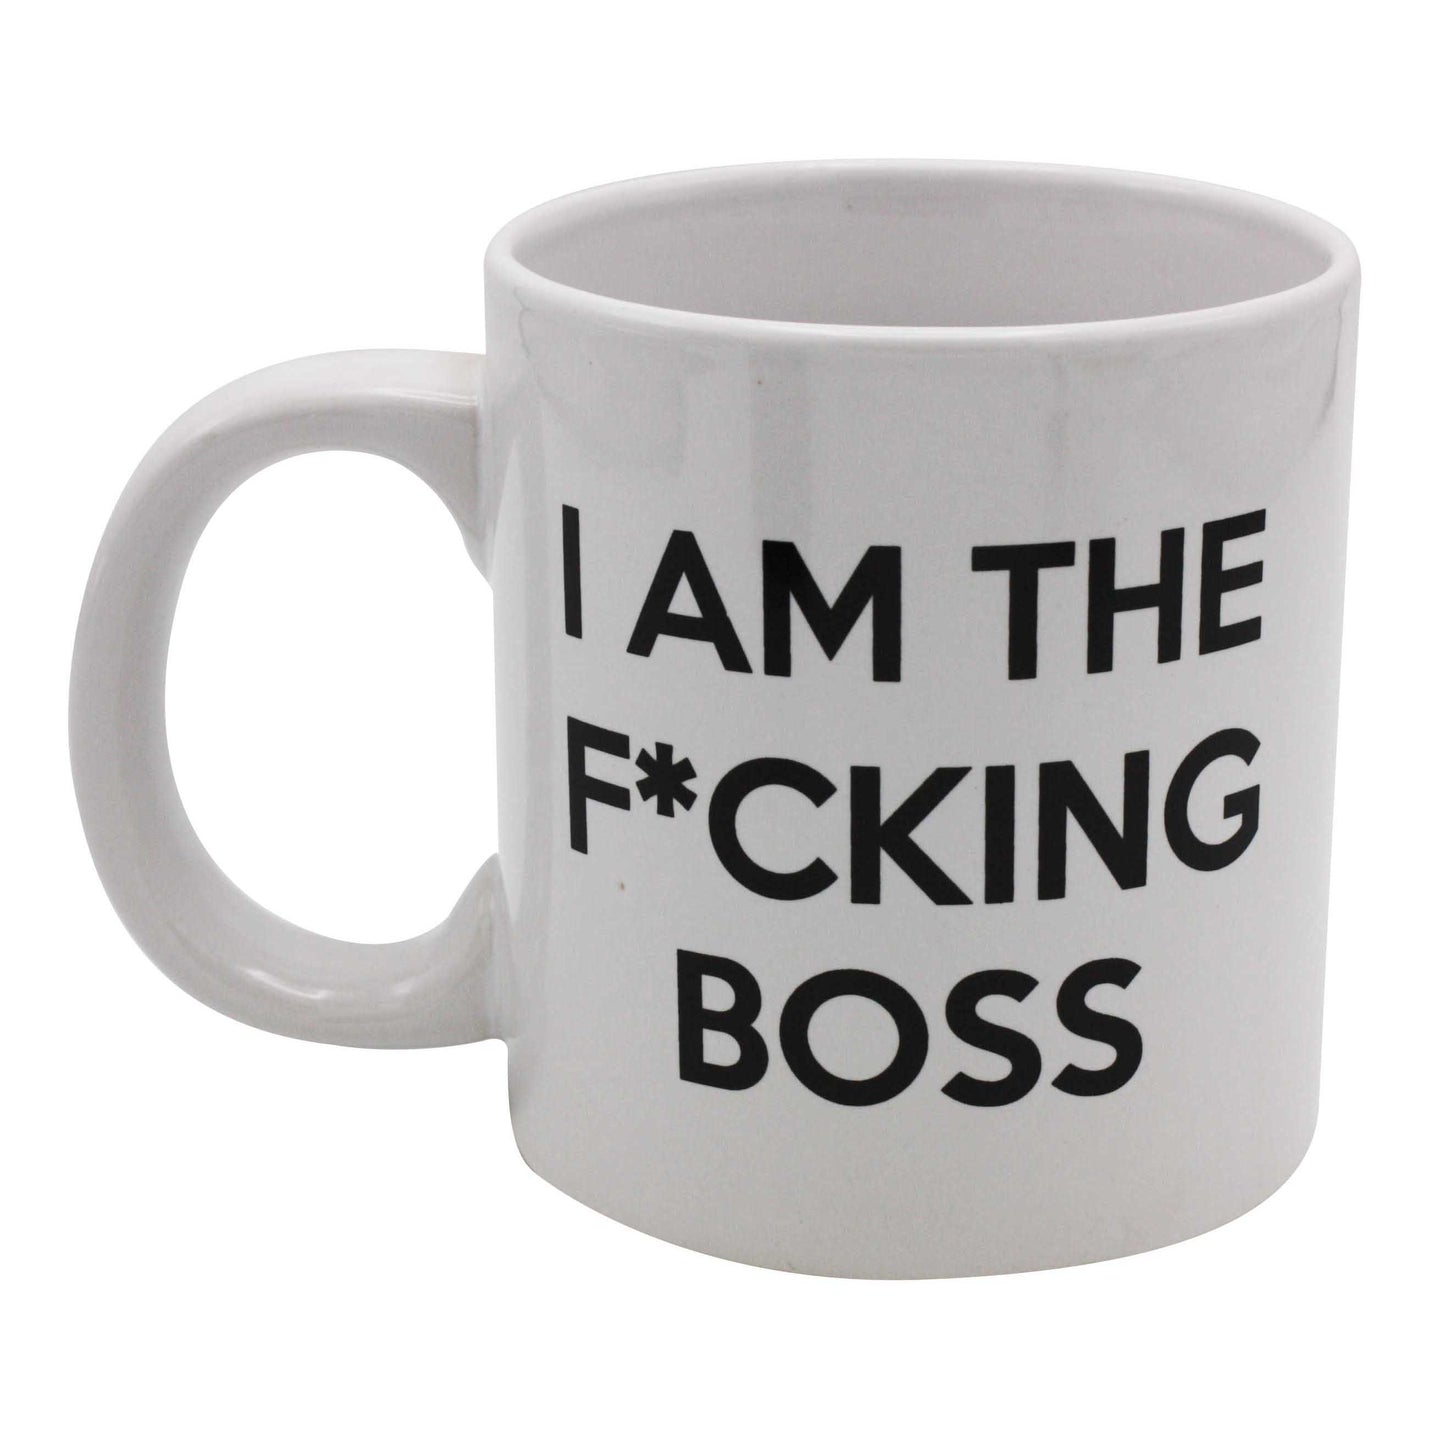 Giant F*cking Boss Mug